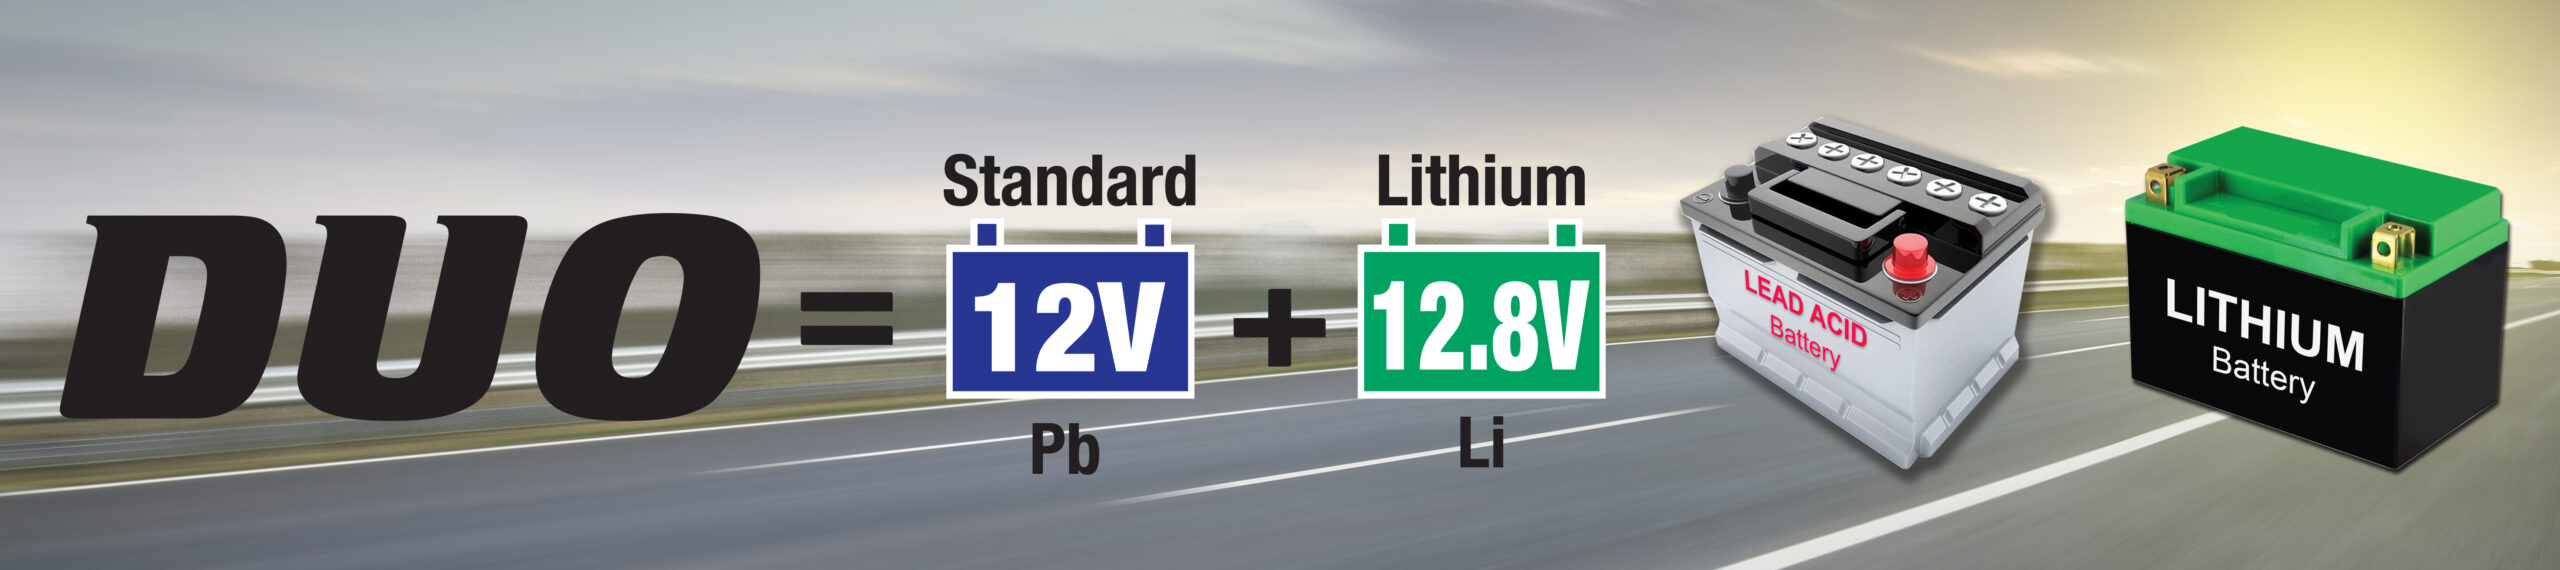 DUO signifie standard 12V Pb et Lithium 12.8V Li